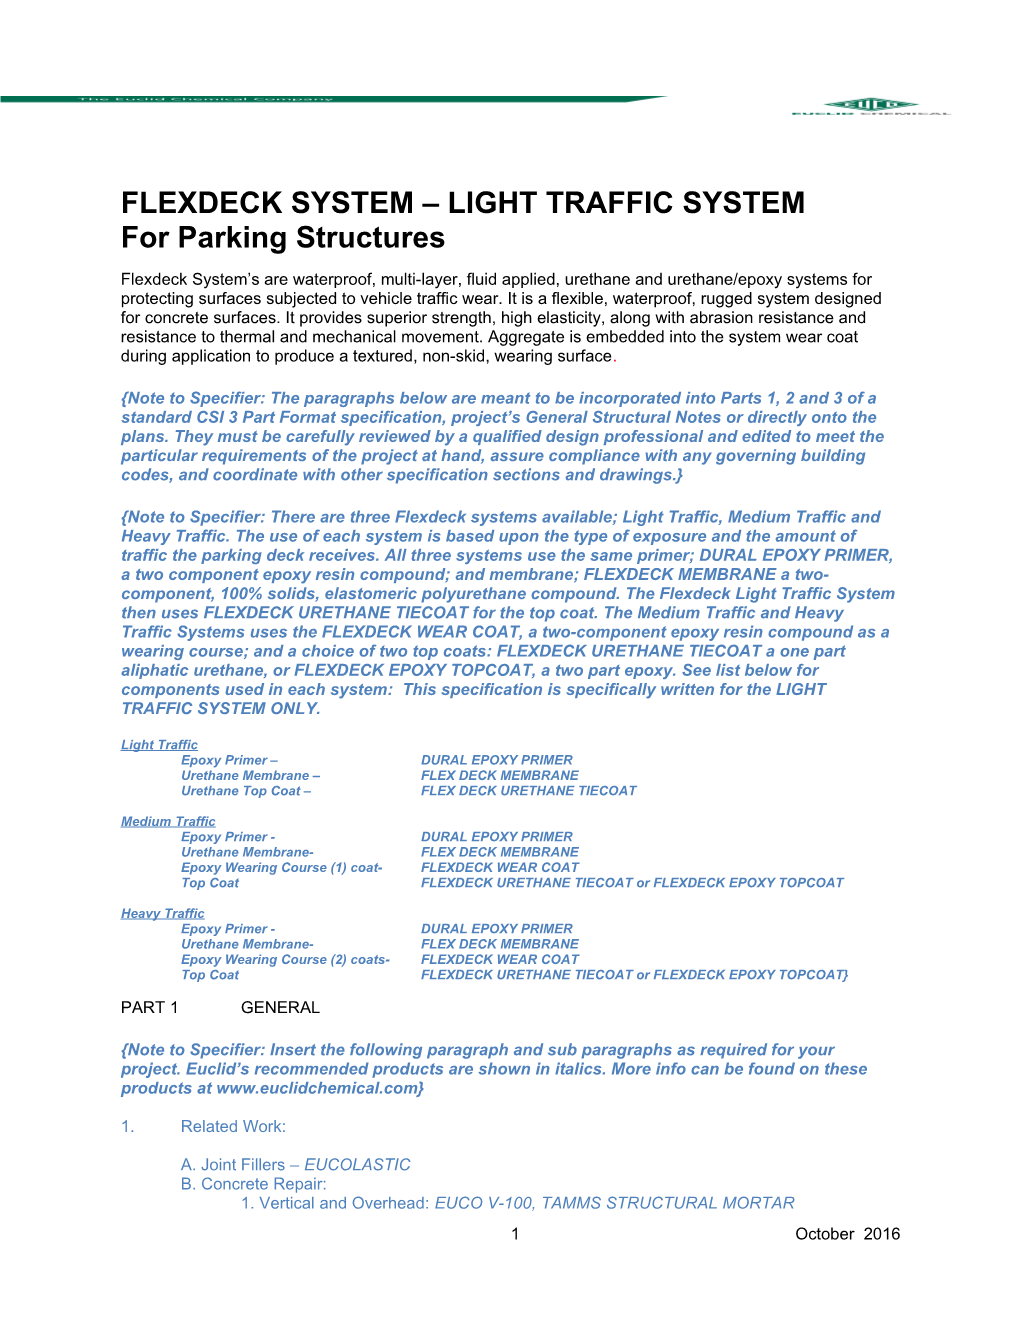 Flexdeck System Light Traffic System